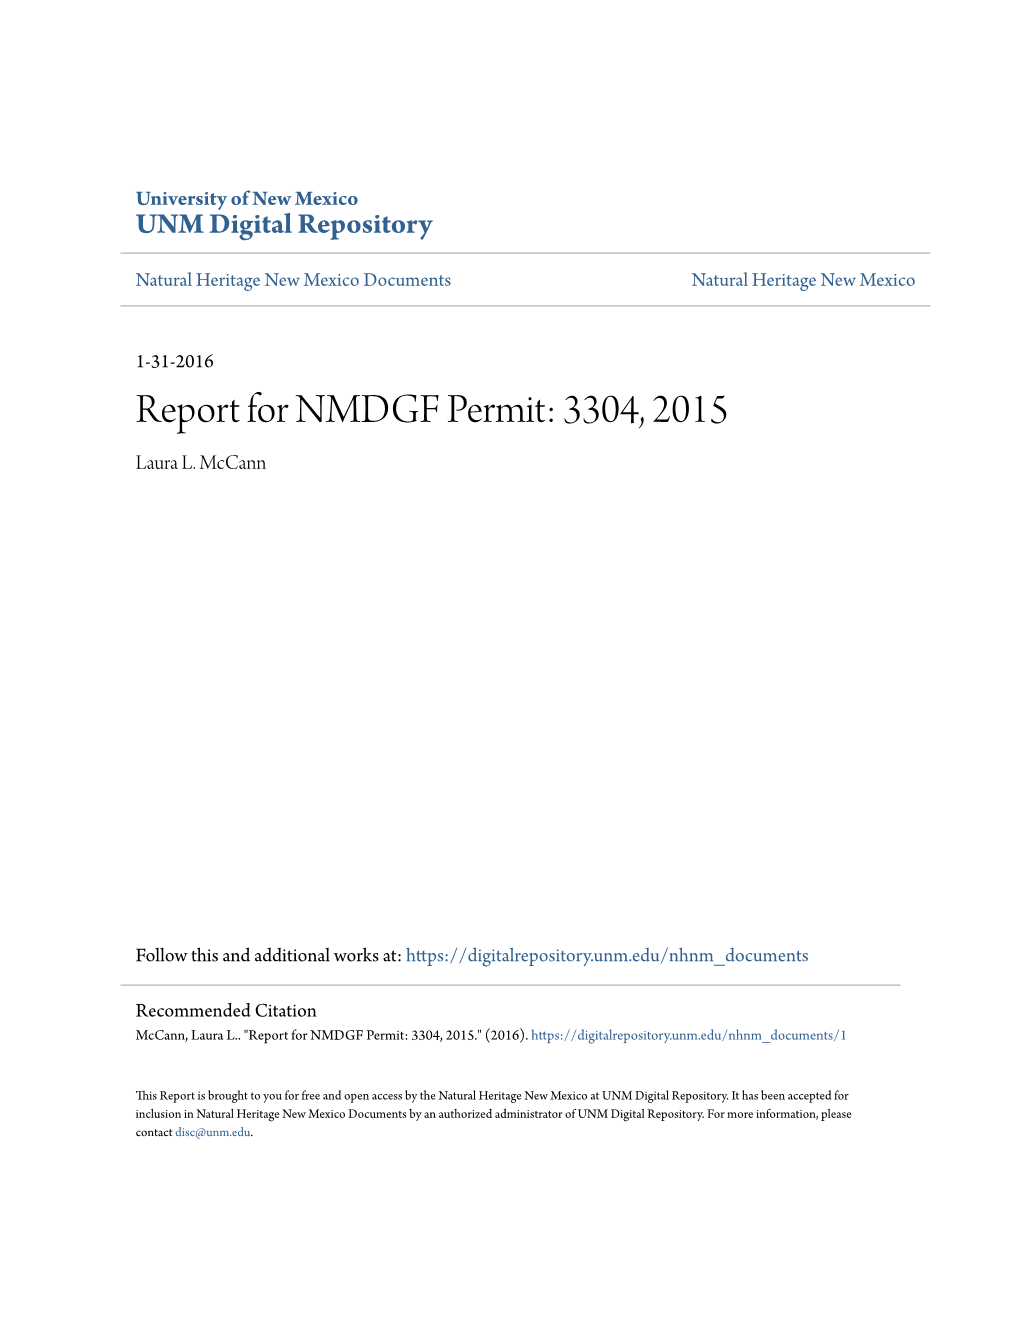 Report for NMDGF Permit: 3304, 2015 Laura L